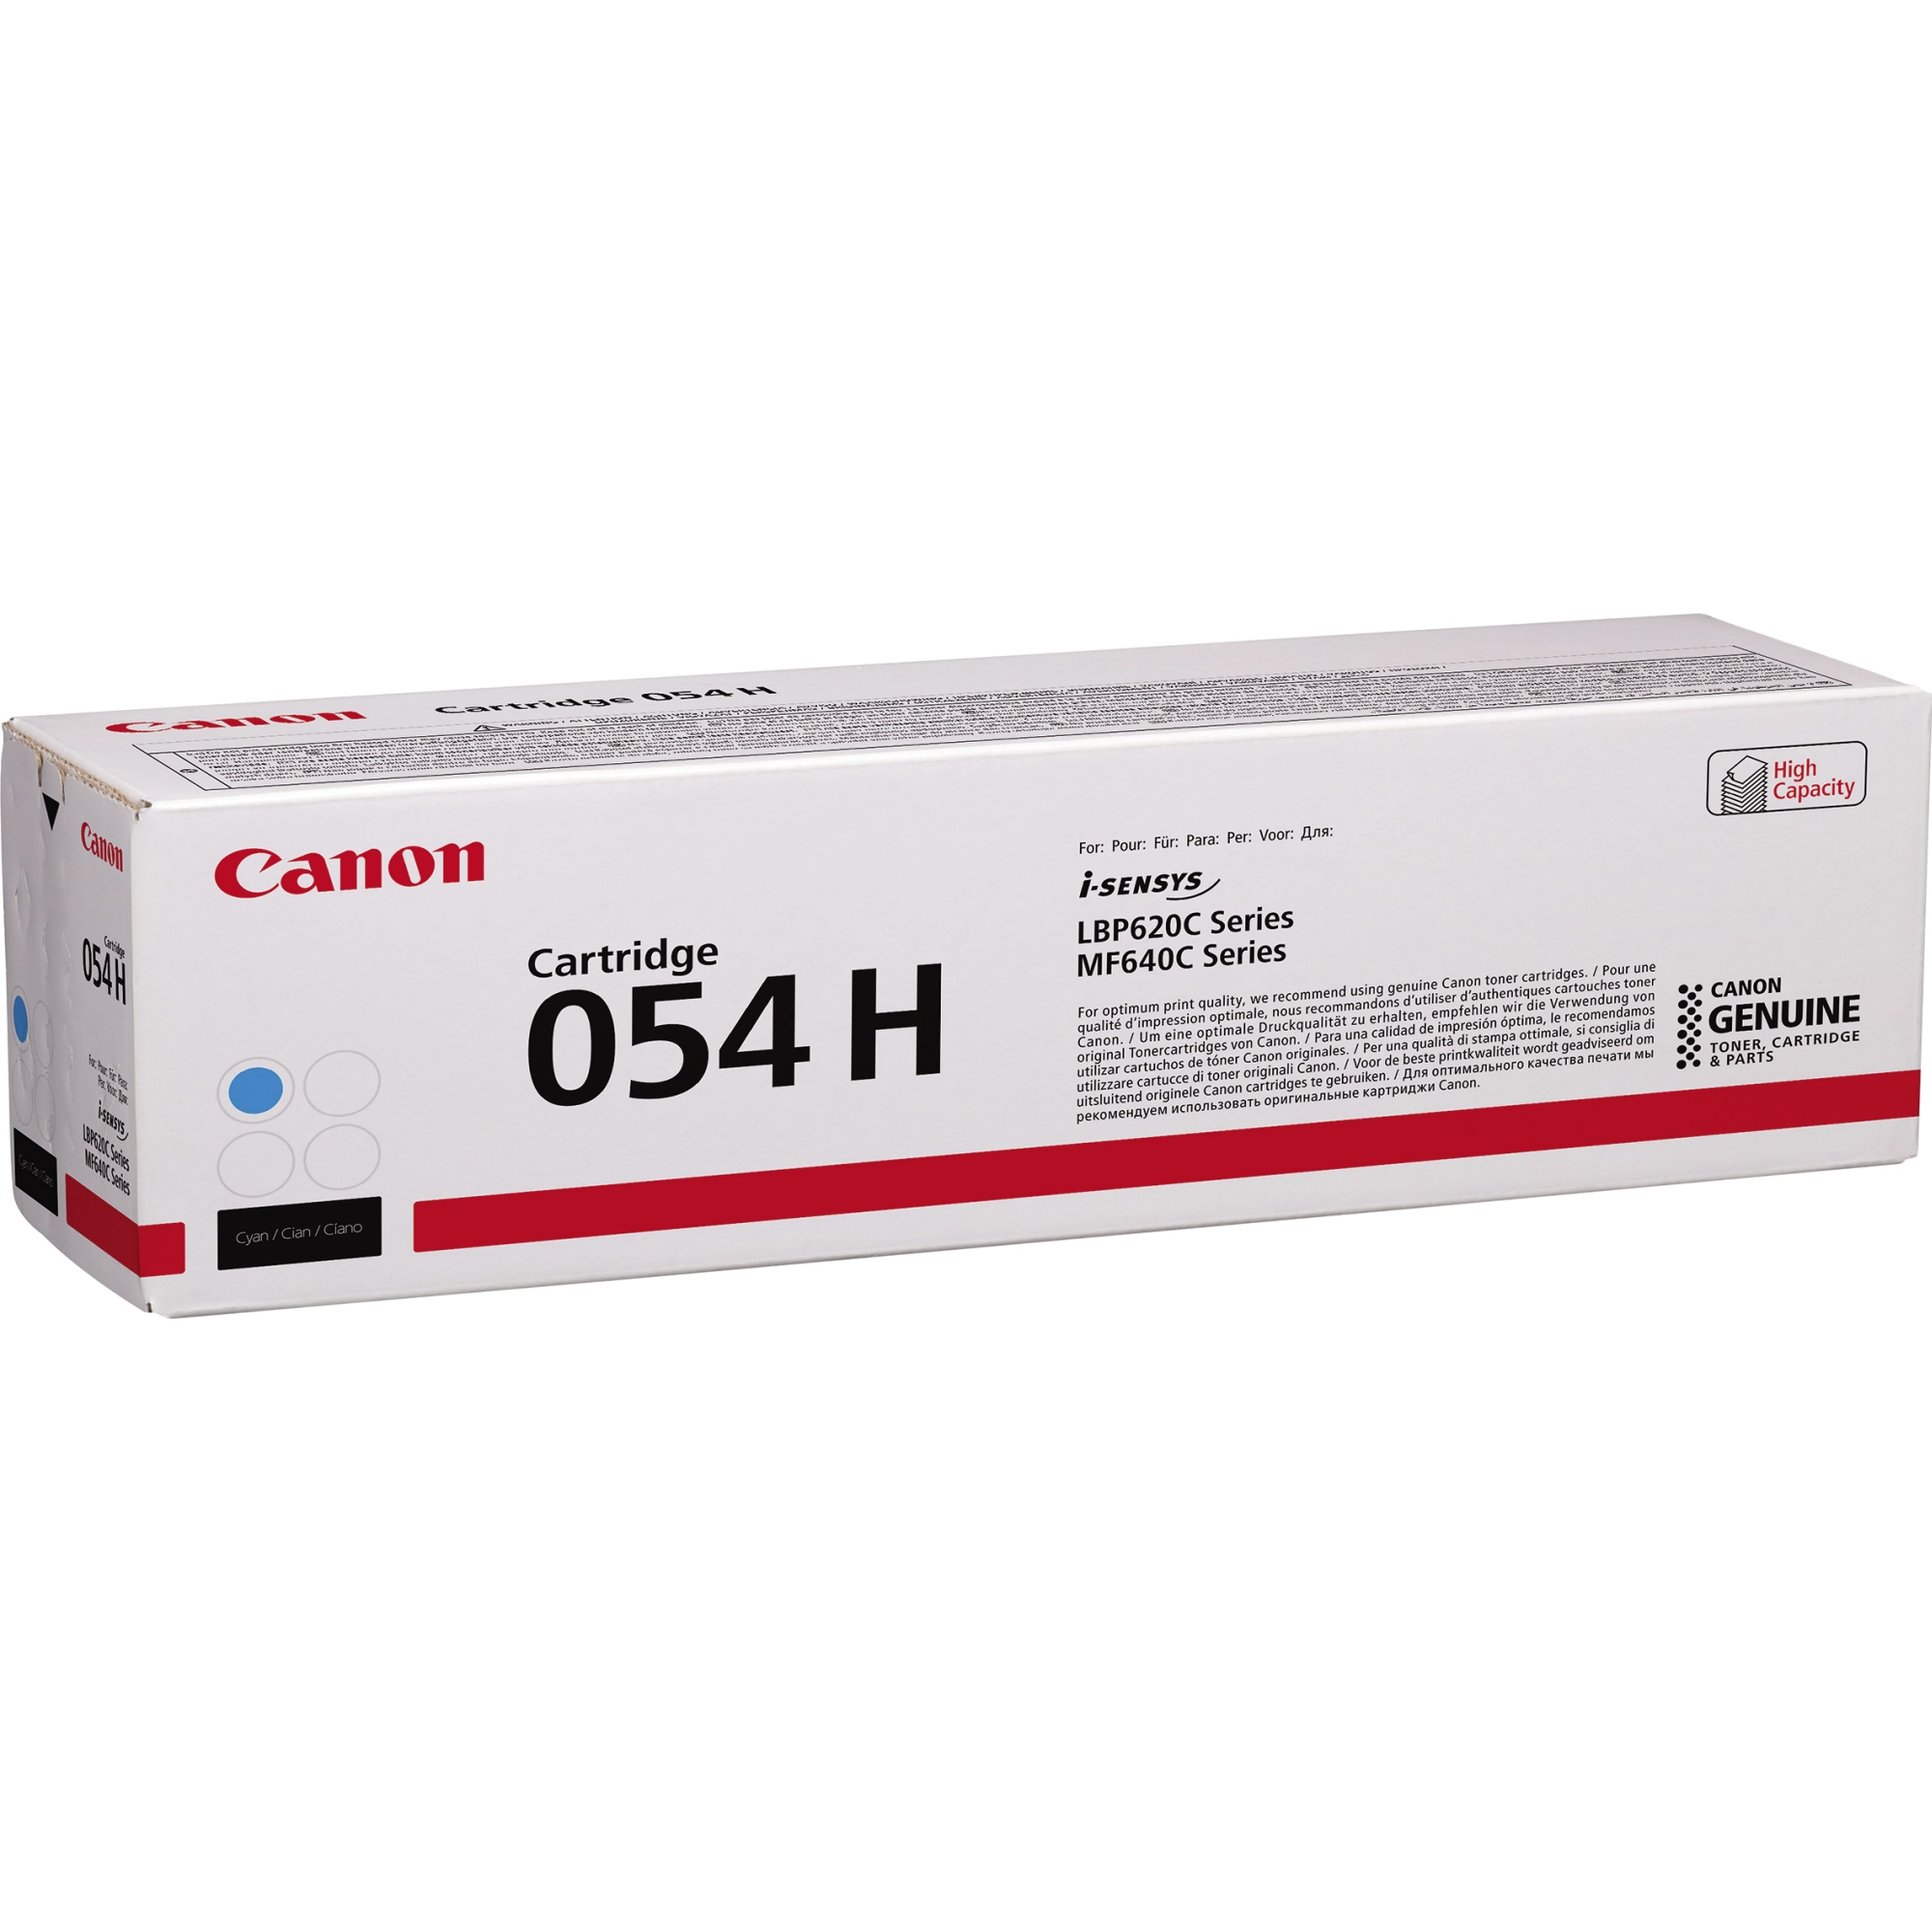 Canon Toner 054 H ca. 2.300 Seiten cyan